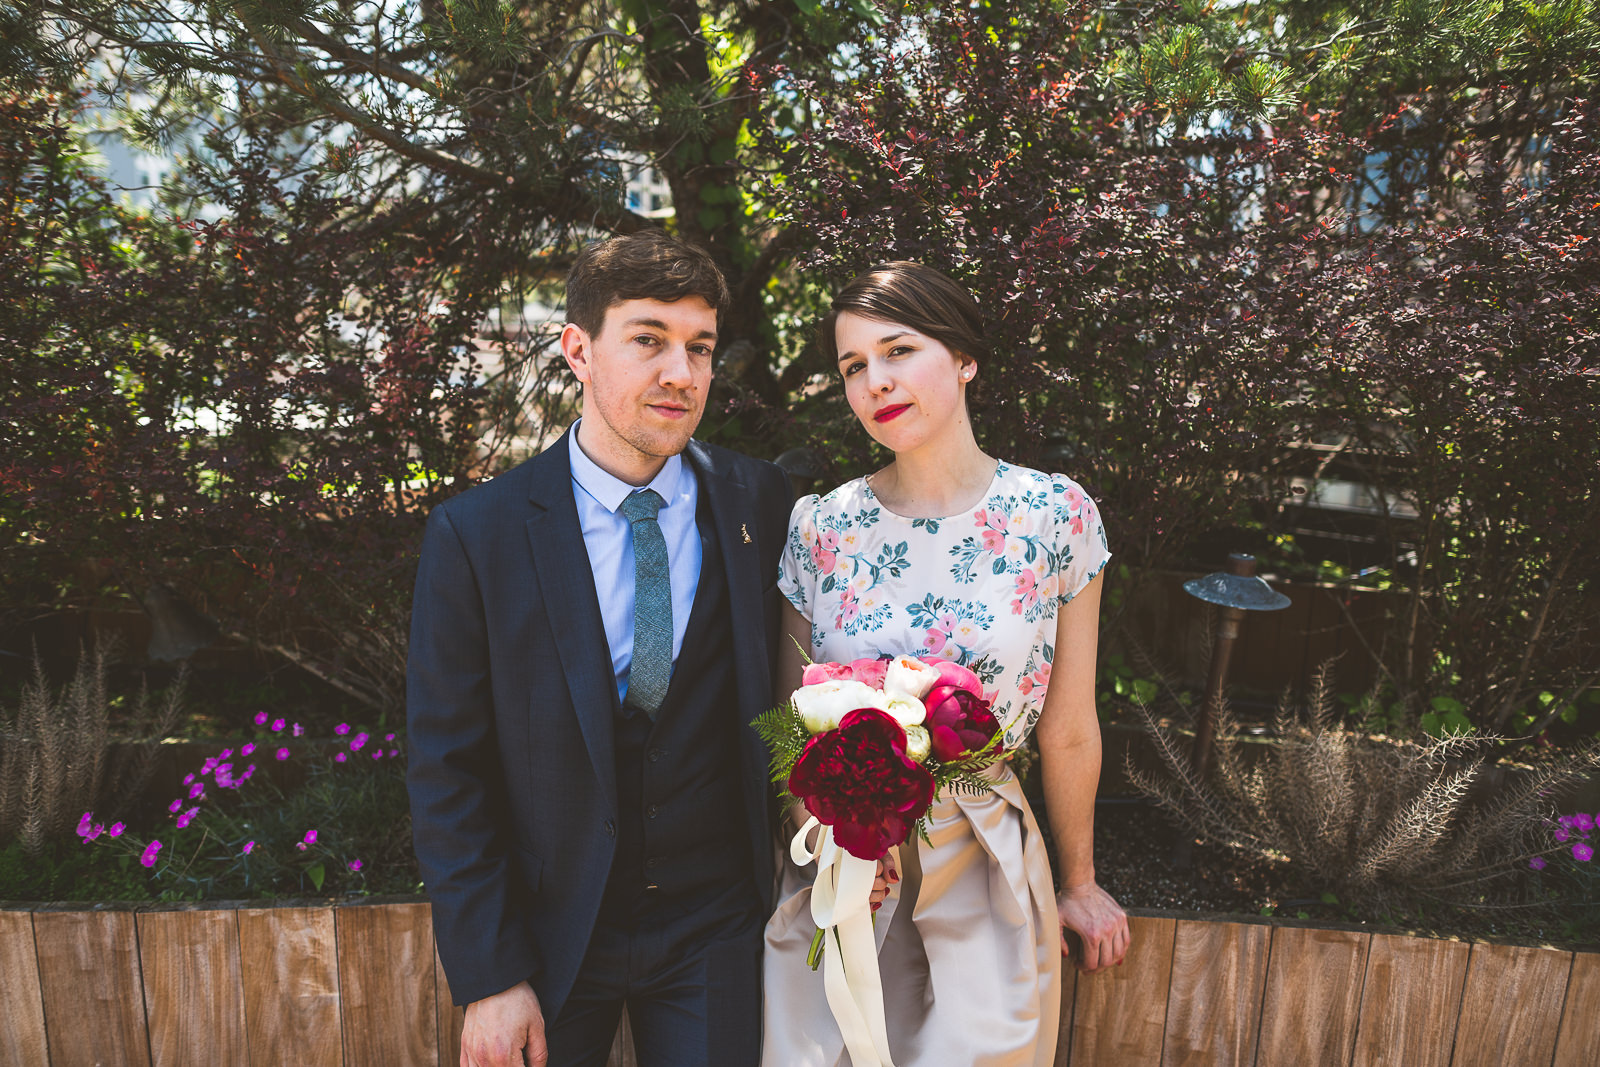 15 fun portraits during wedding - Megan + John // Chicago Elopement at Lightology